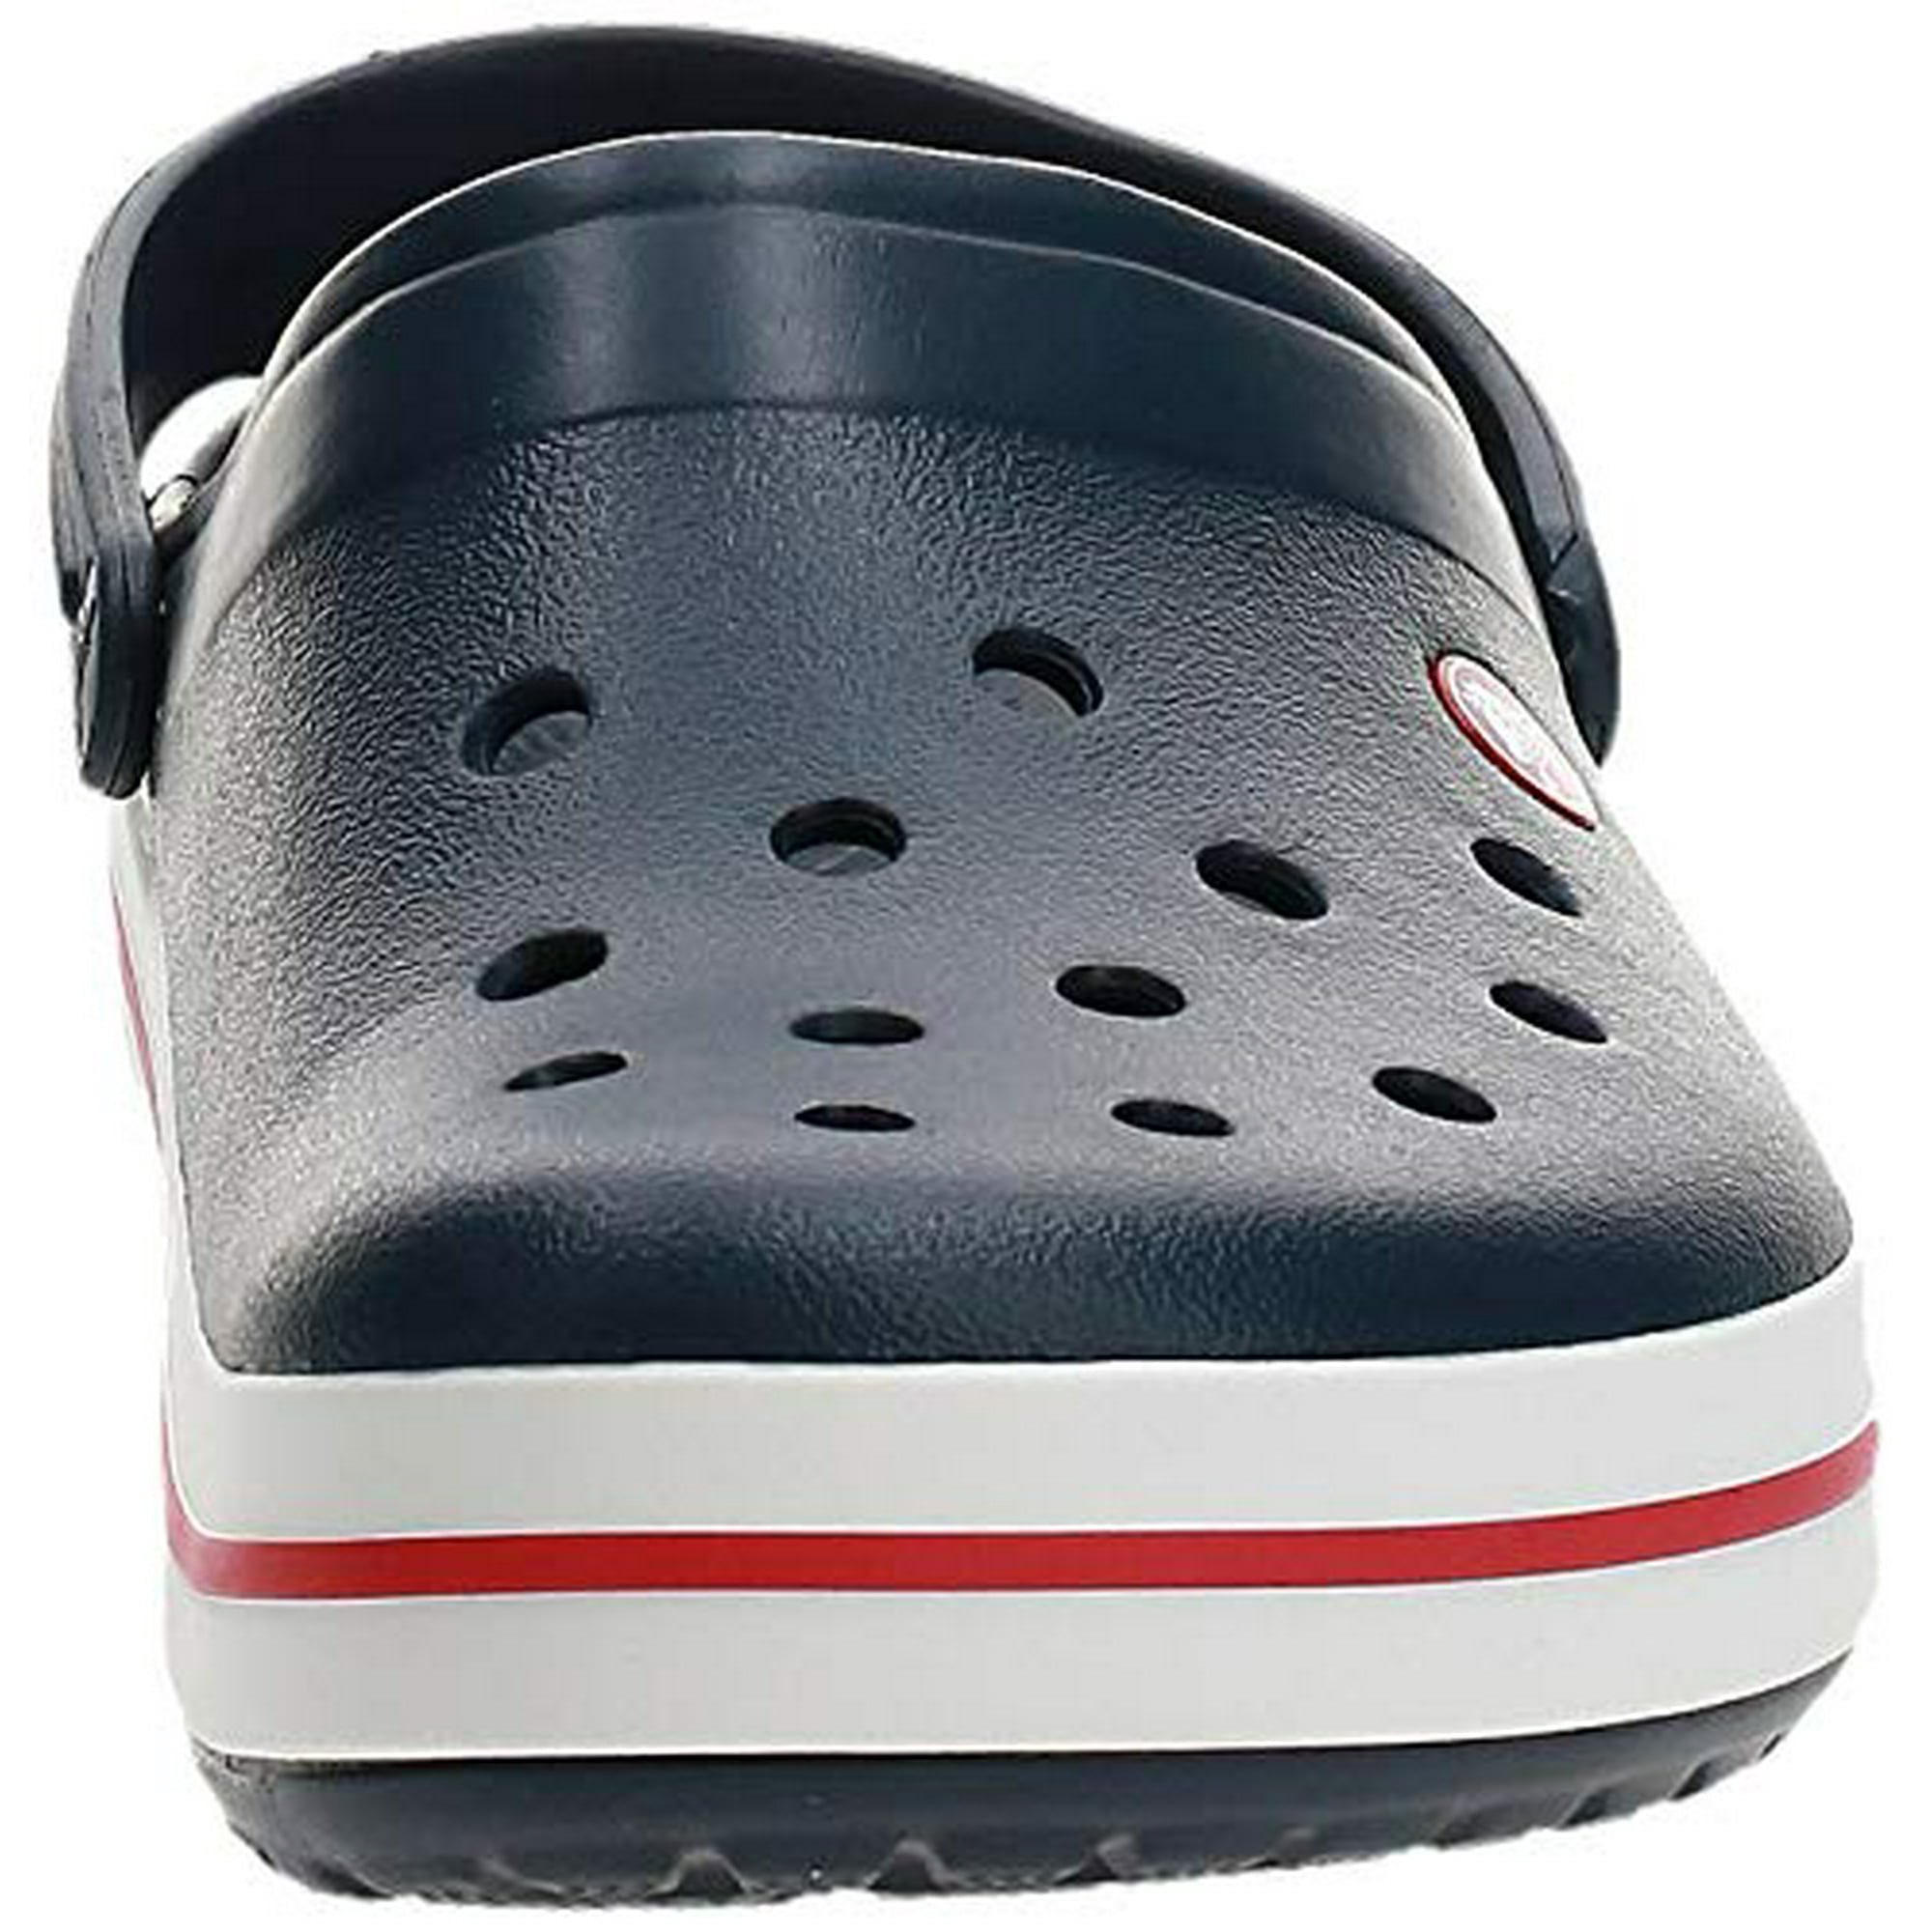 Crocs Men's Crocband Black Ankle-High Rubber Sandal - 11M | Walmart Canada